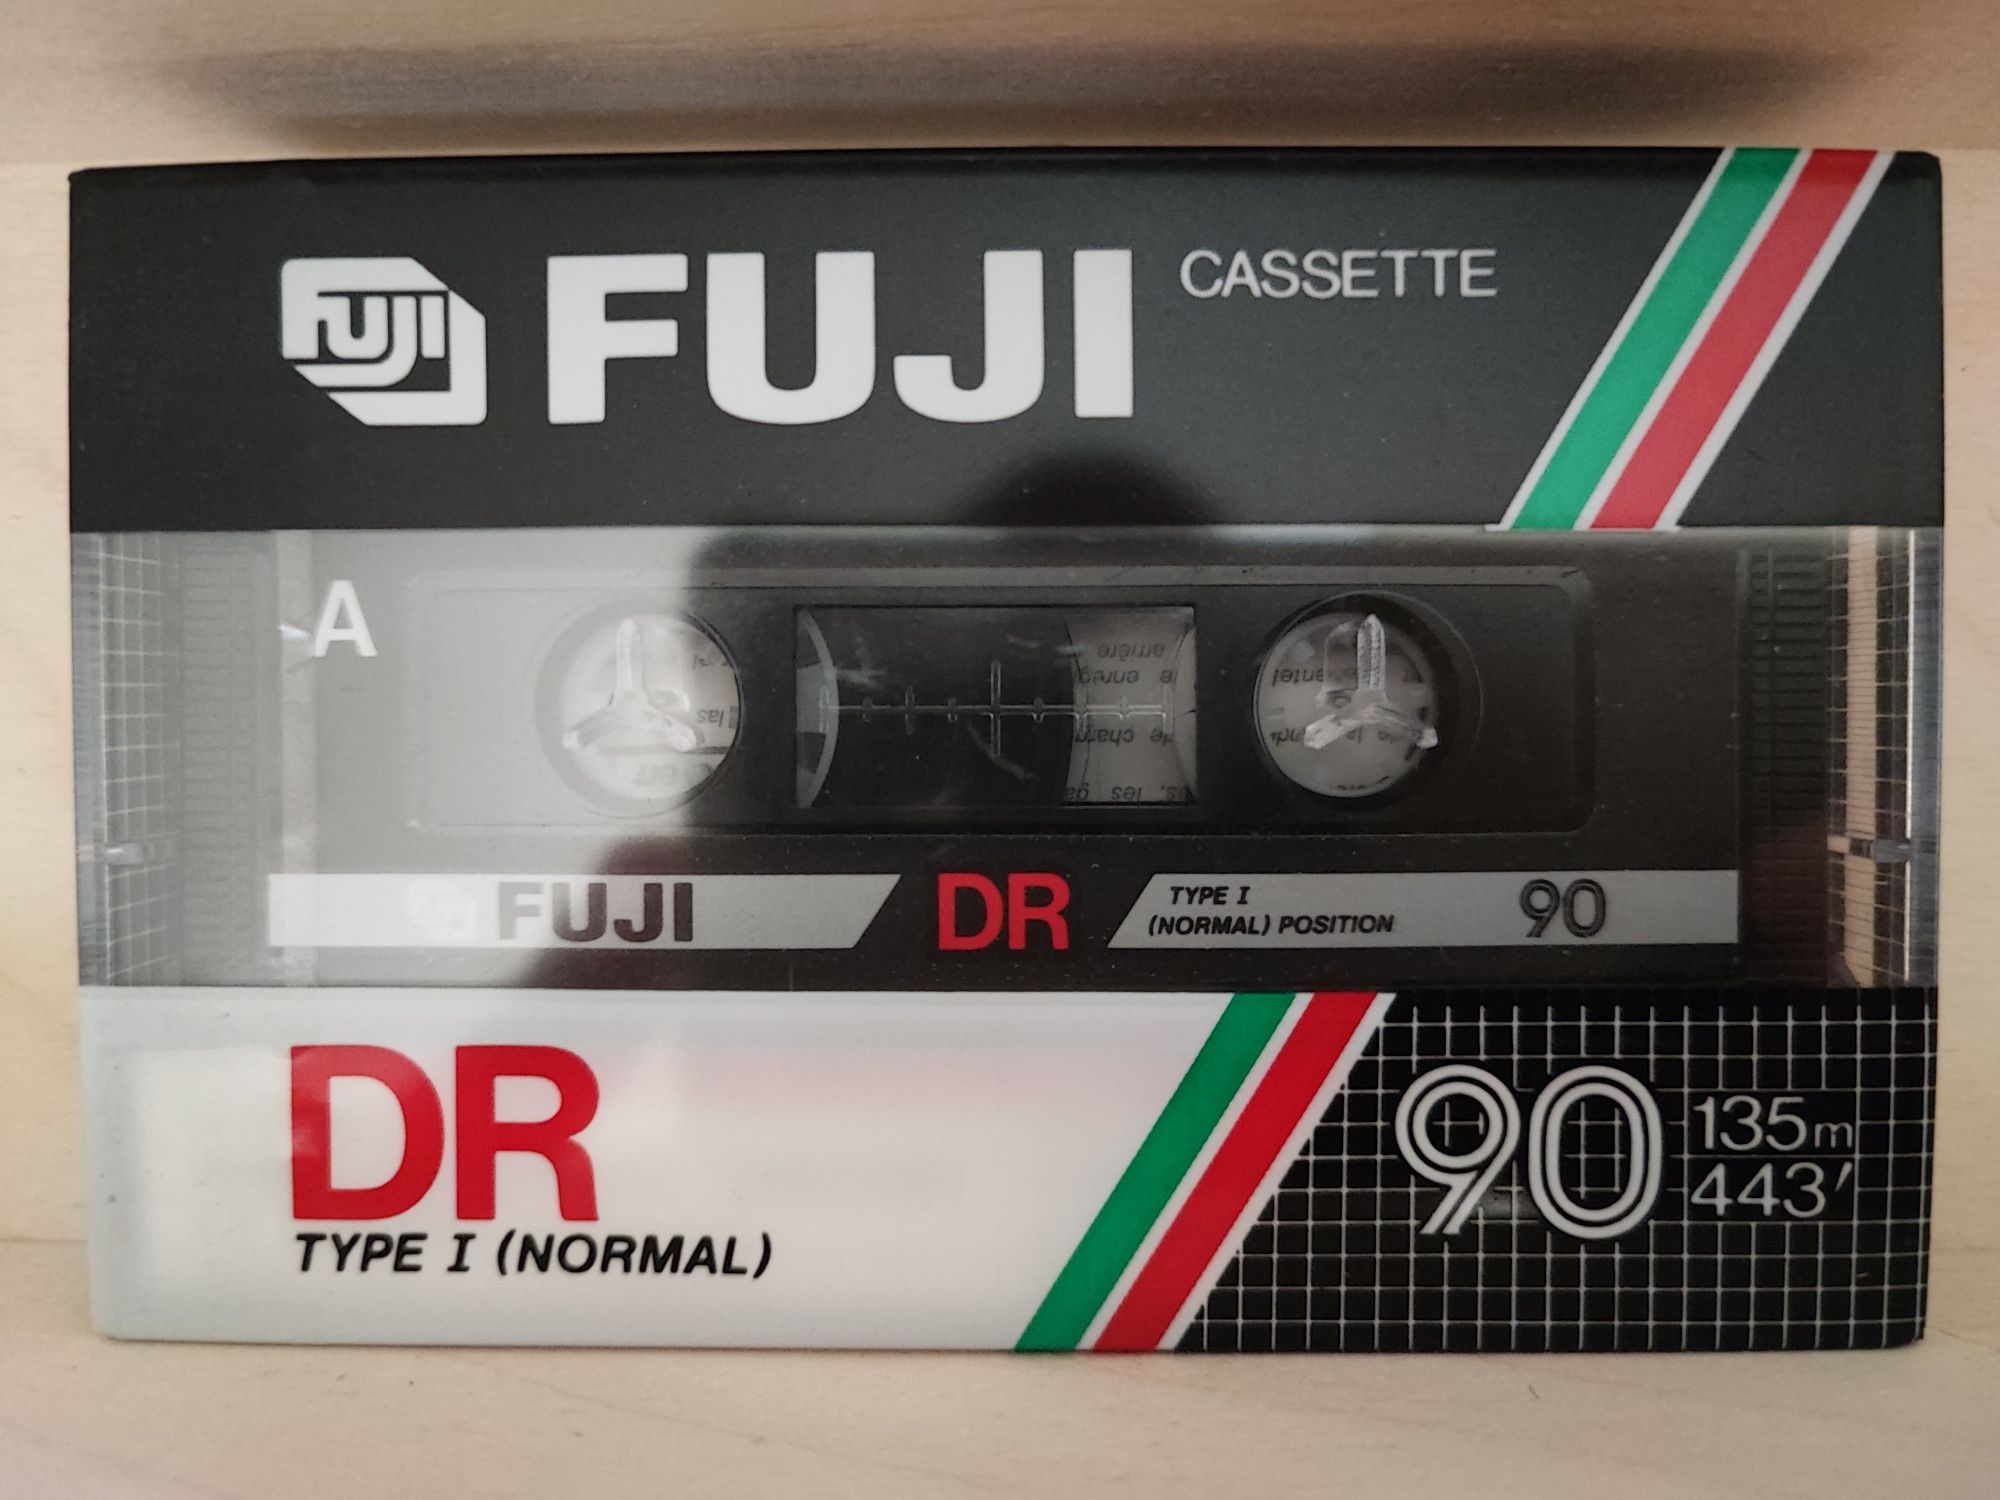 Cassette Fuji DR C90